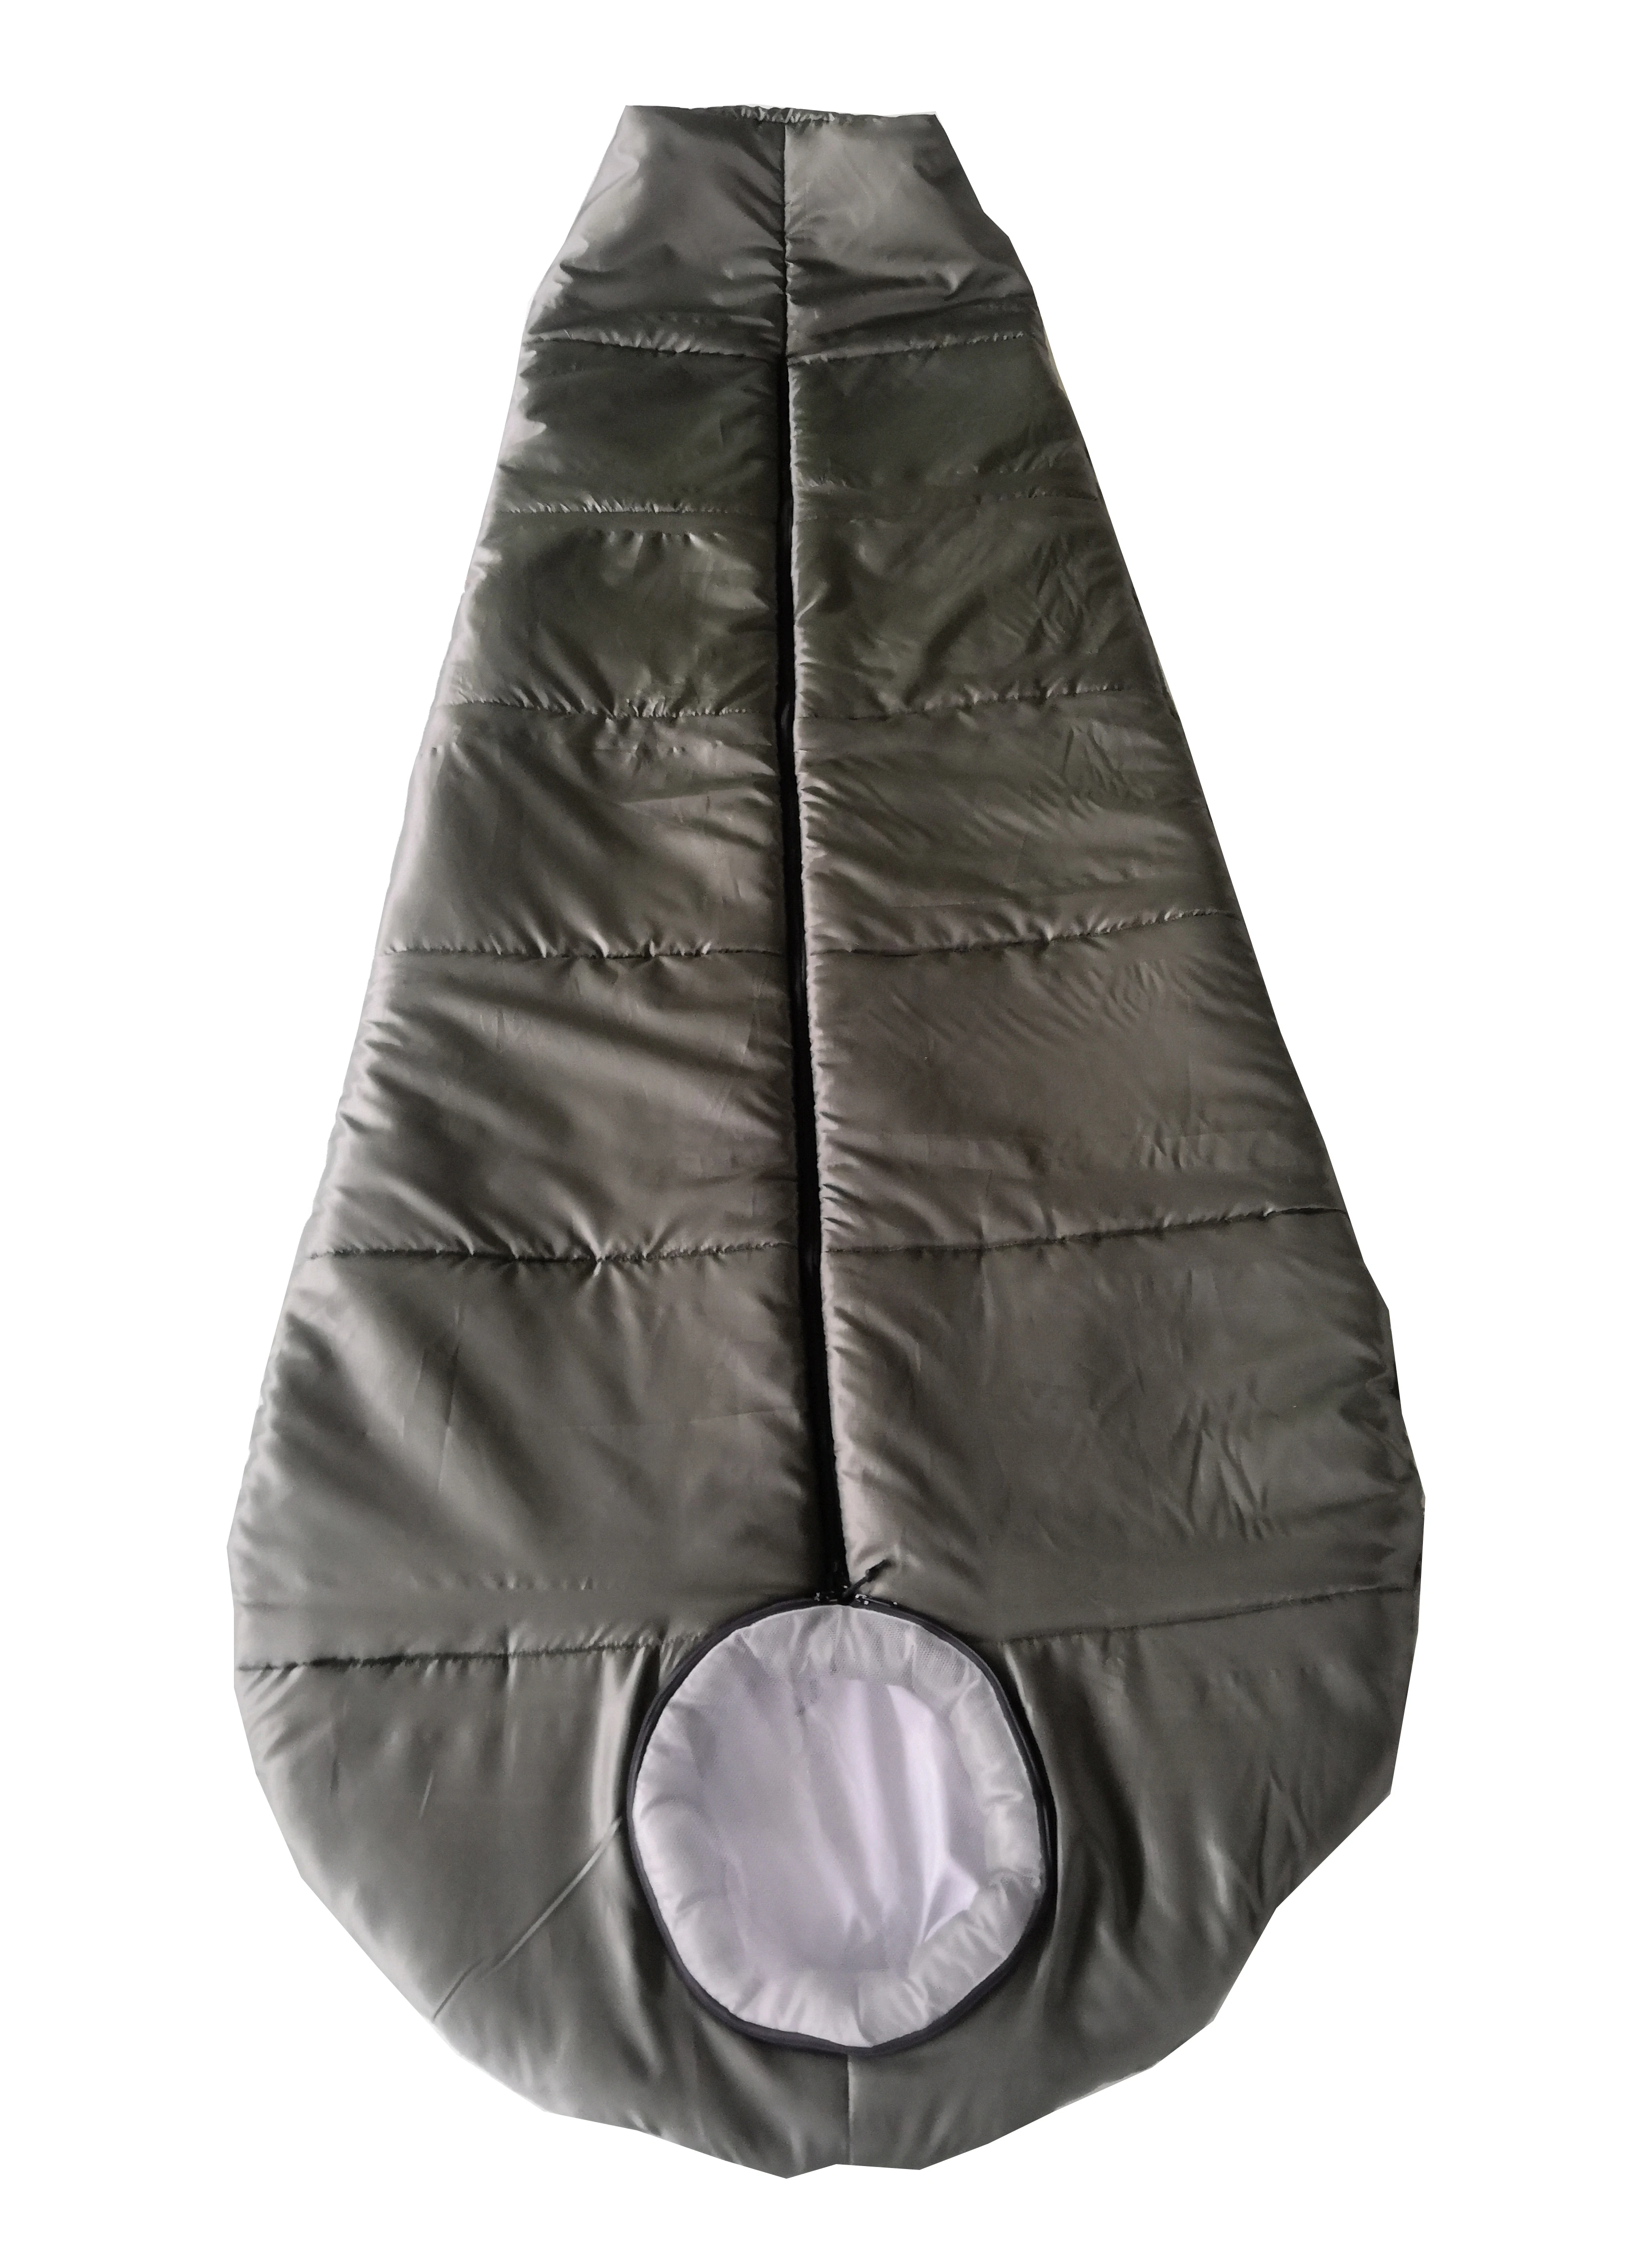 Woqi lazy bag cotton hammock sleeping bag camping special matching hammock style sleeping bag mummy